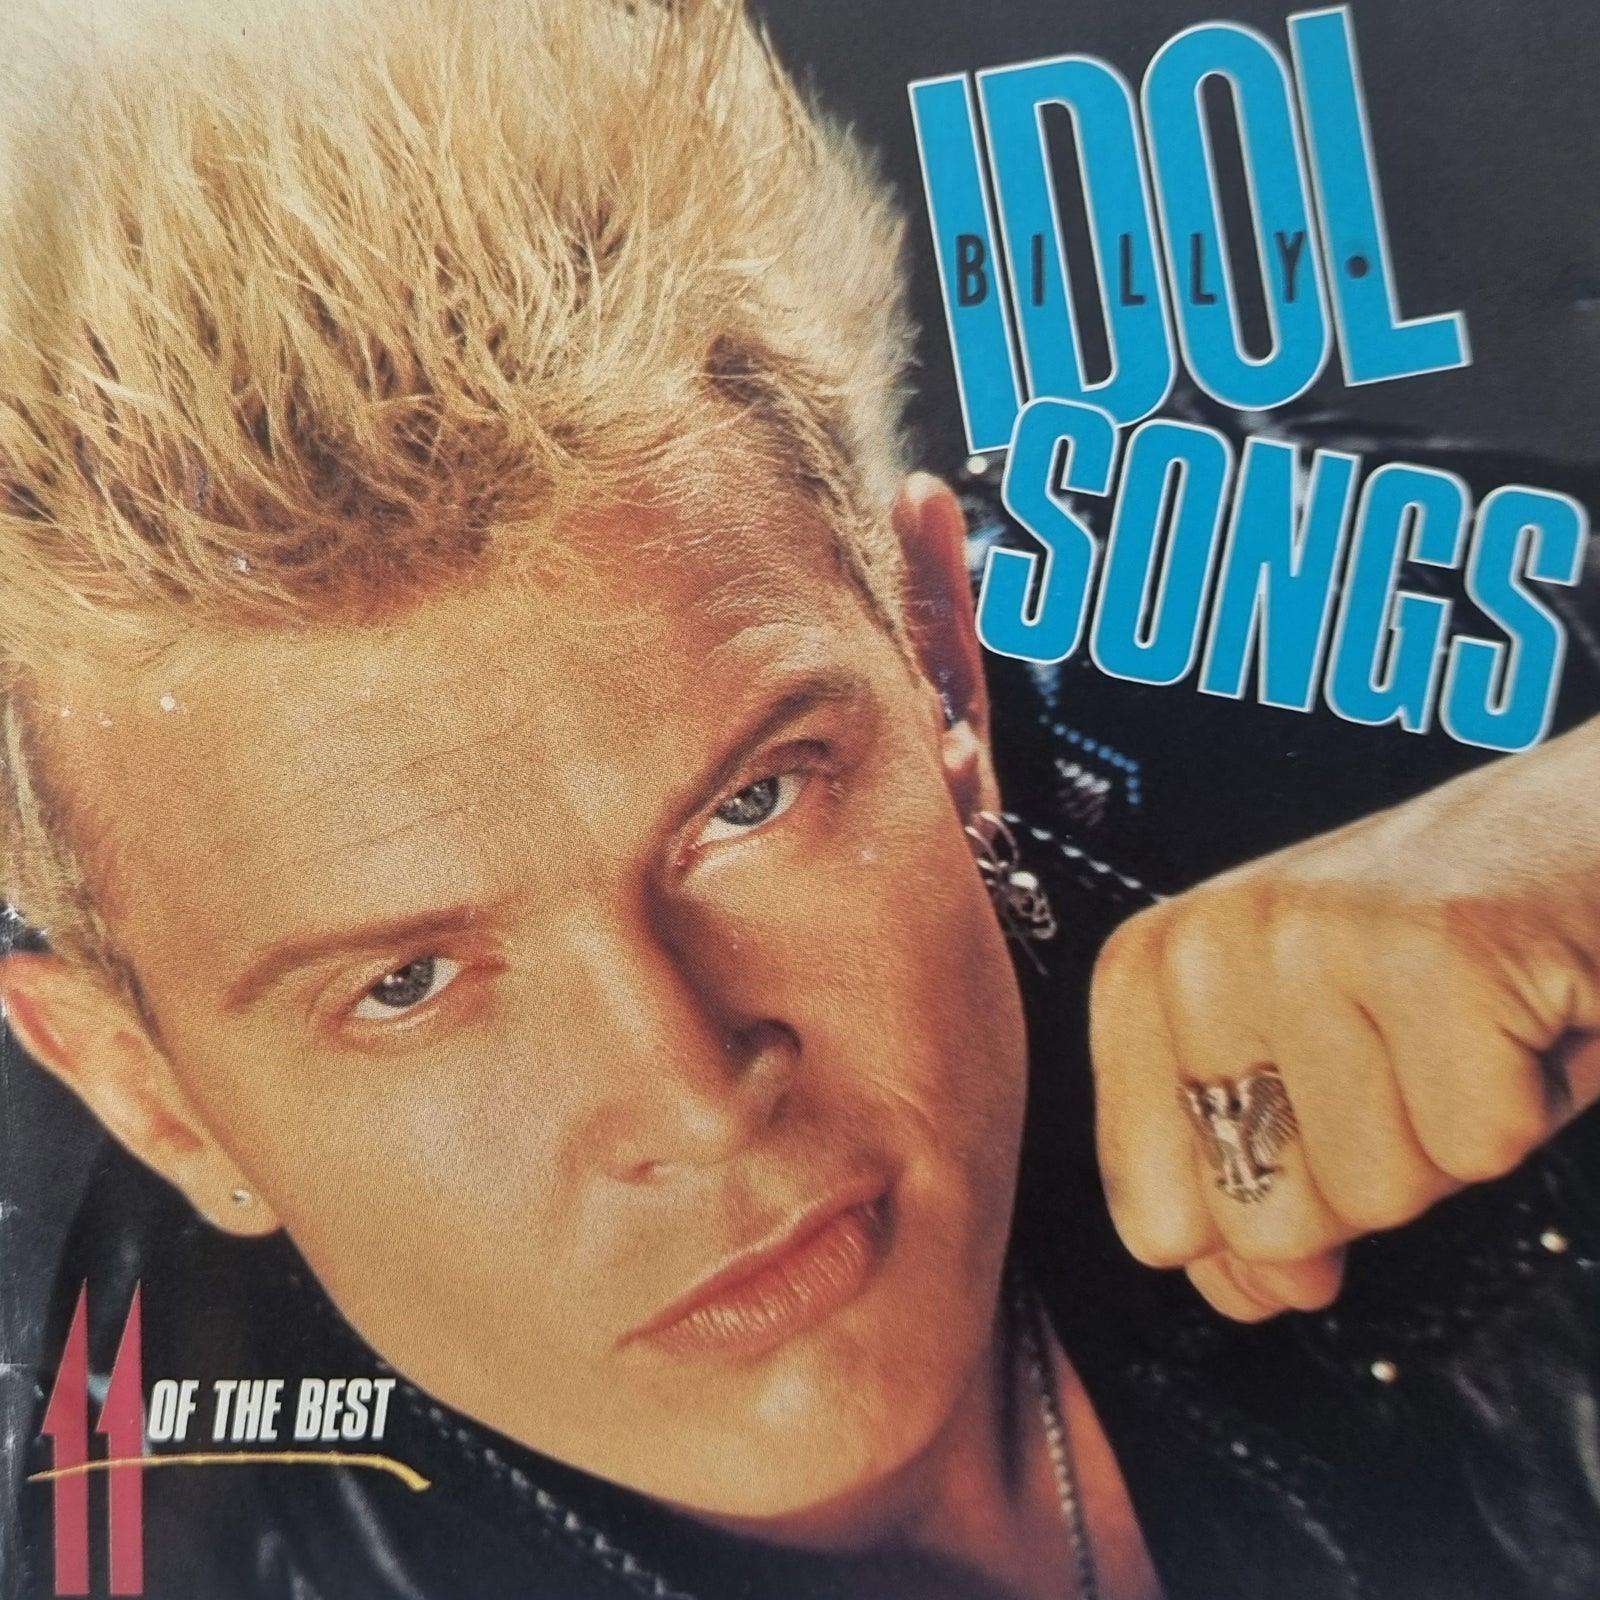 Billy Idol - Songs: 11 of the Best (CD)